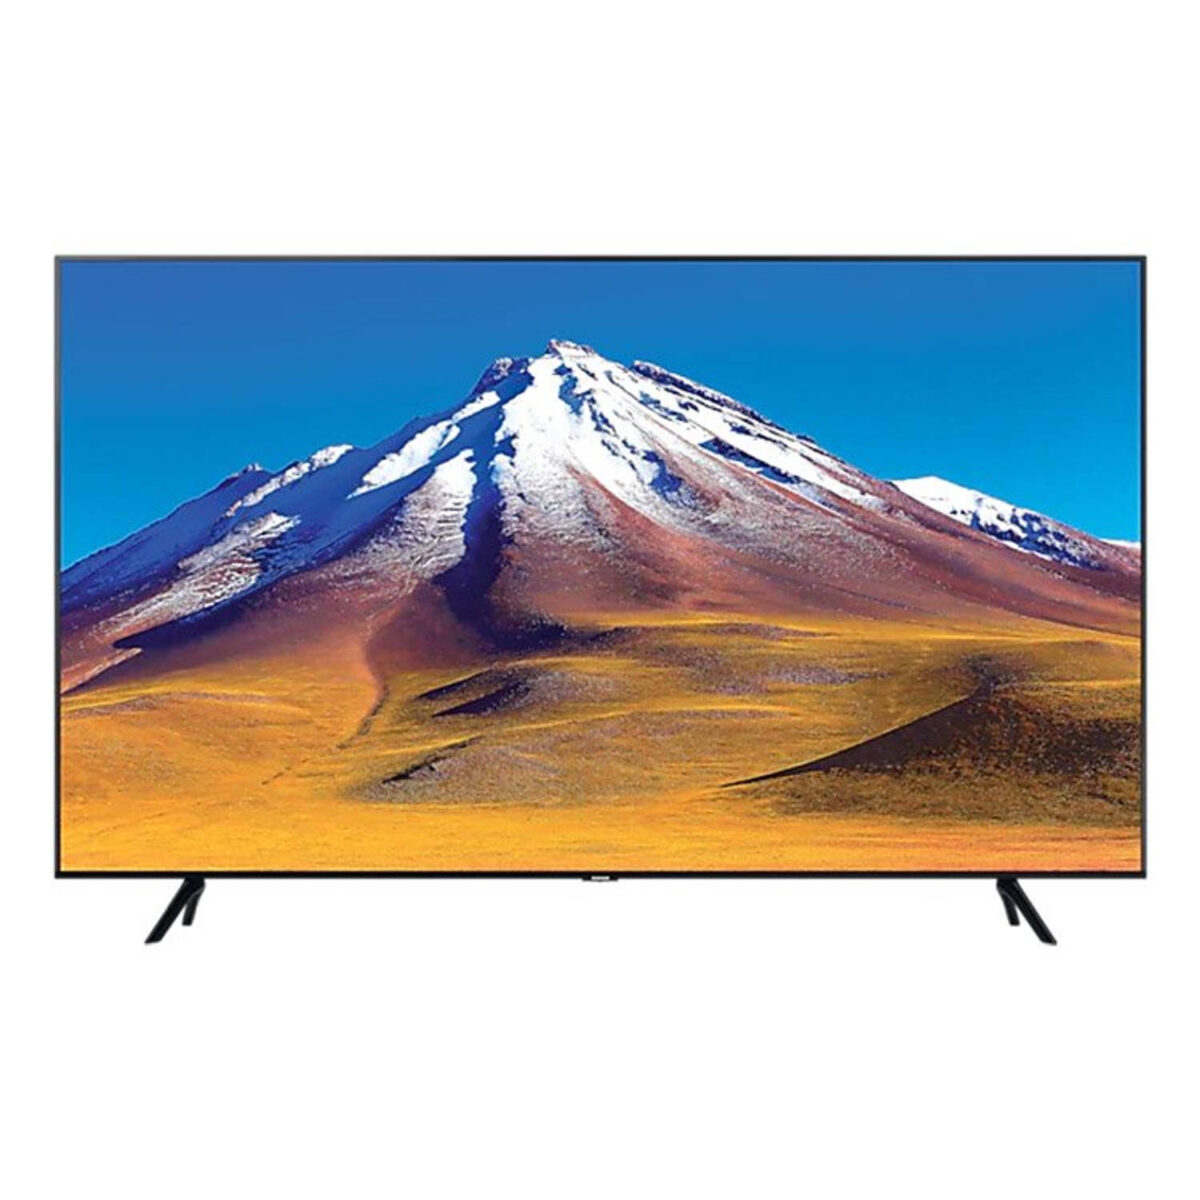 Samsung UE75TU7020 - 4K HDR LED Smart TV (75 inch)